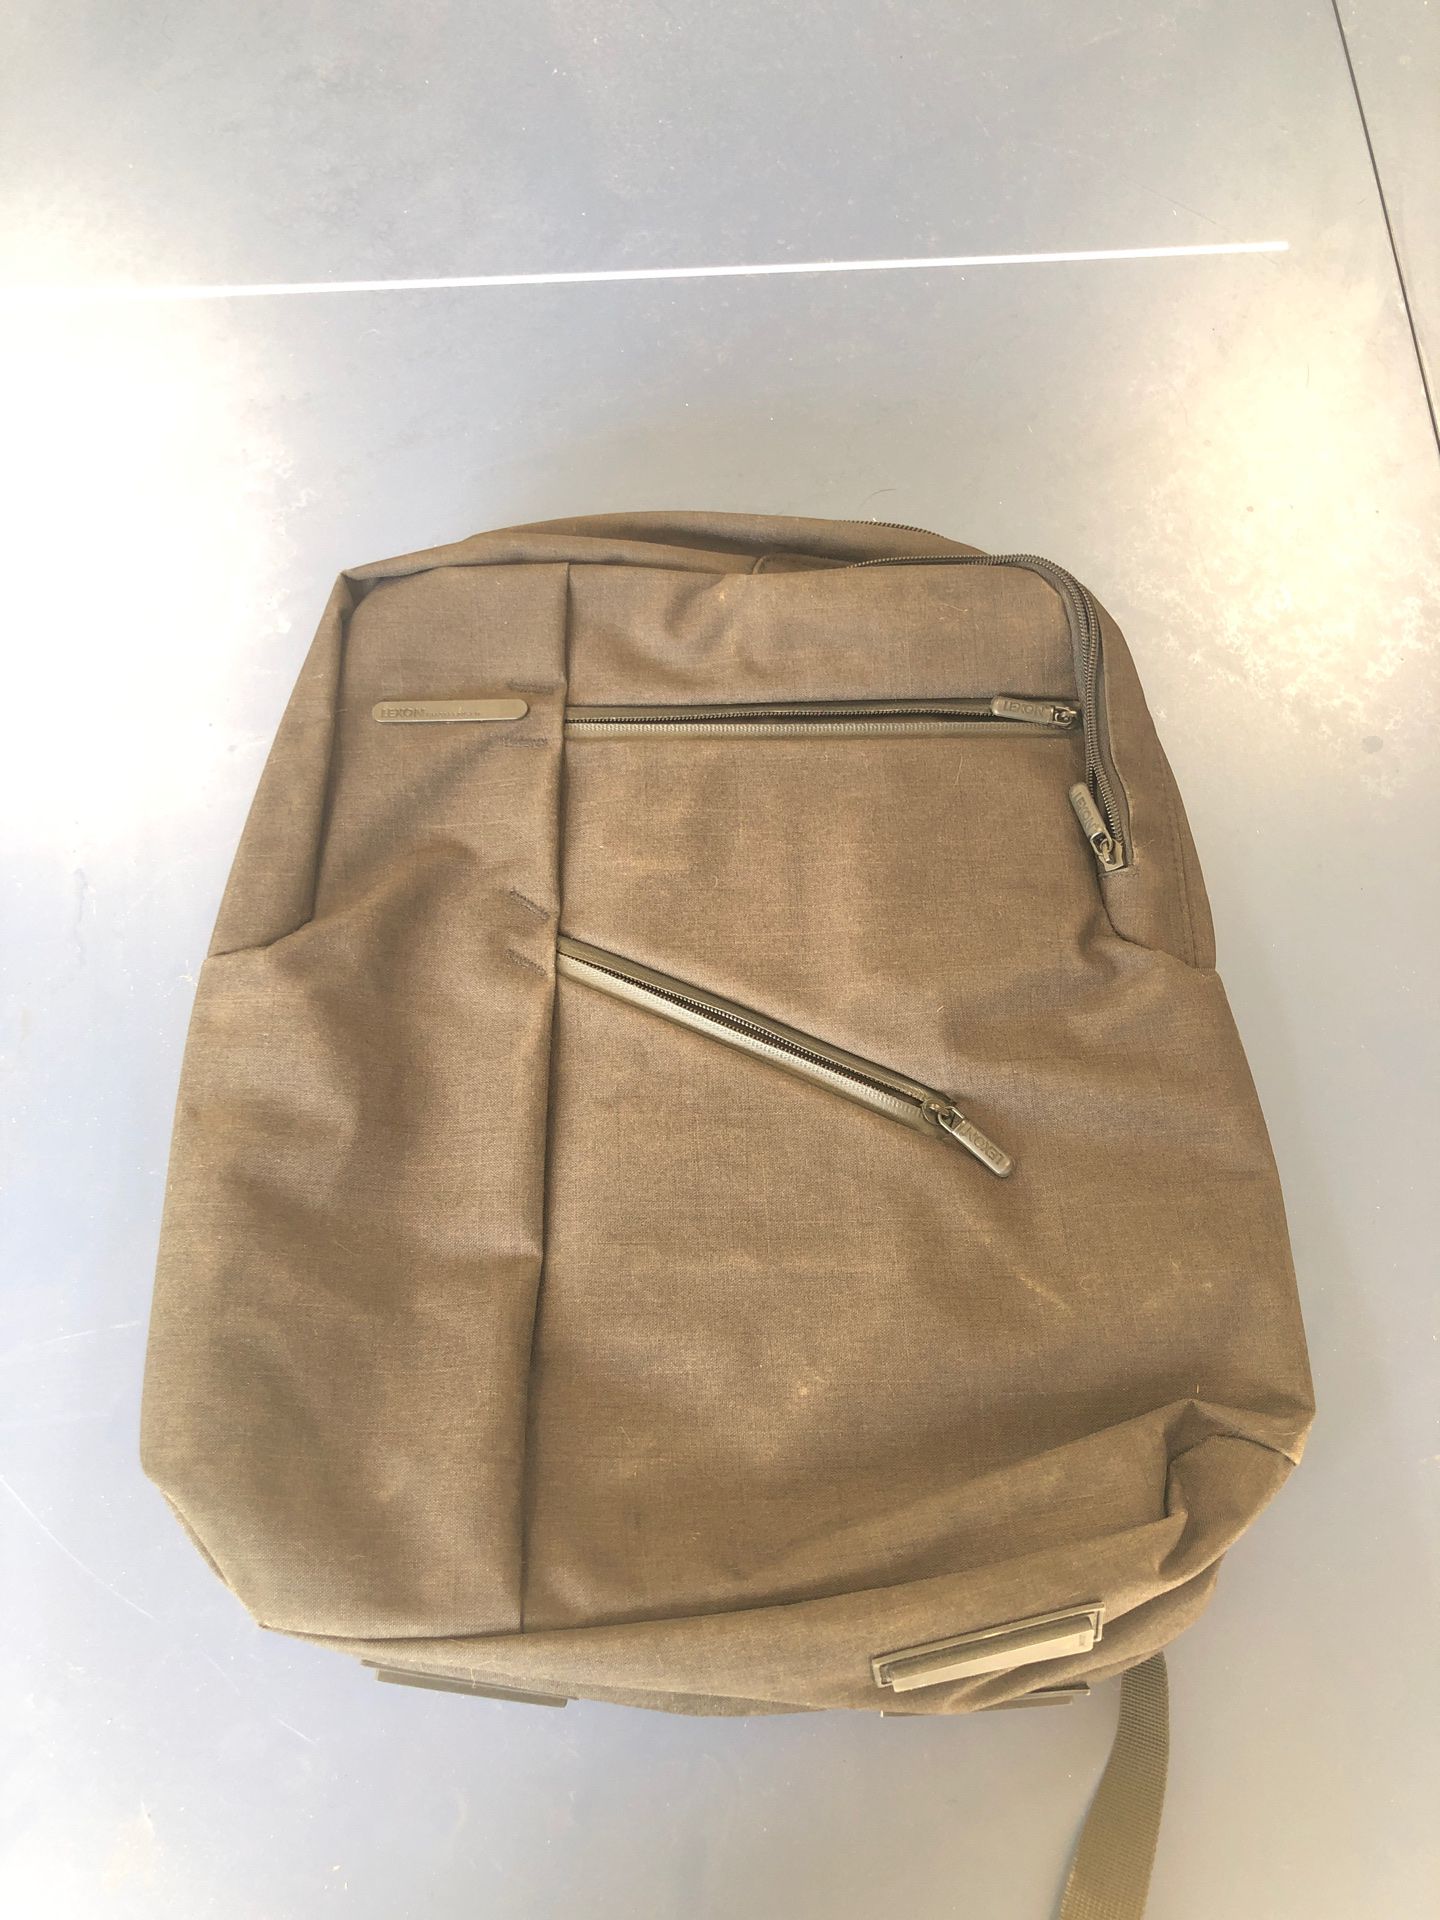 Lexon Challenger Laptop Bag / Backpack